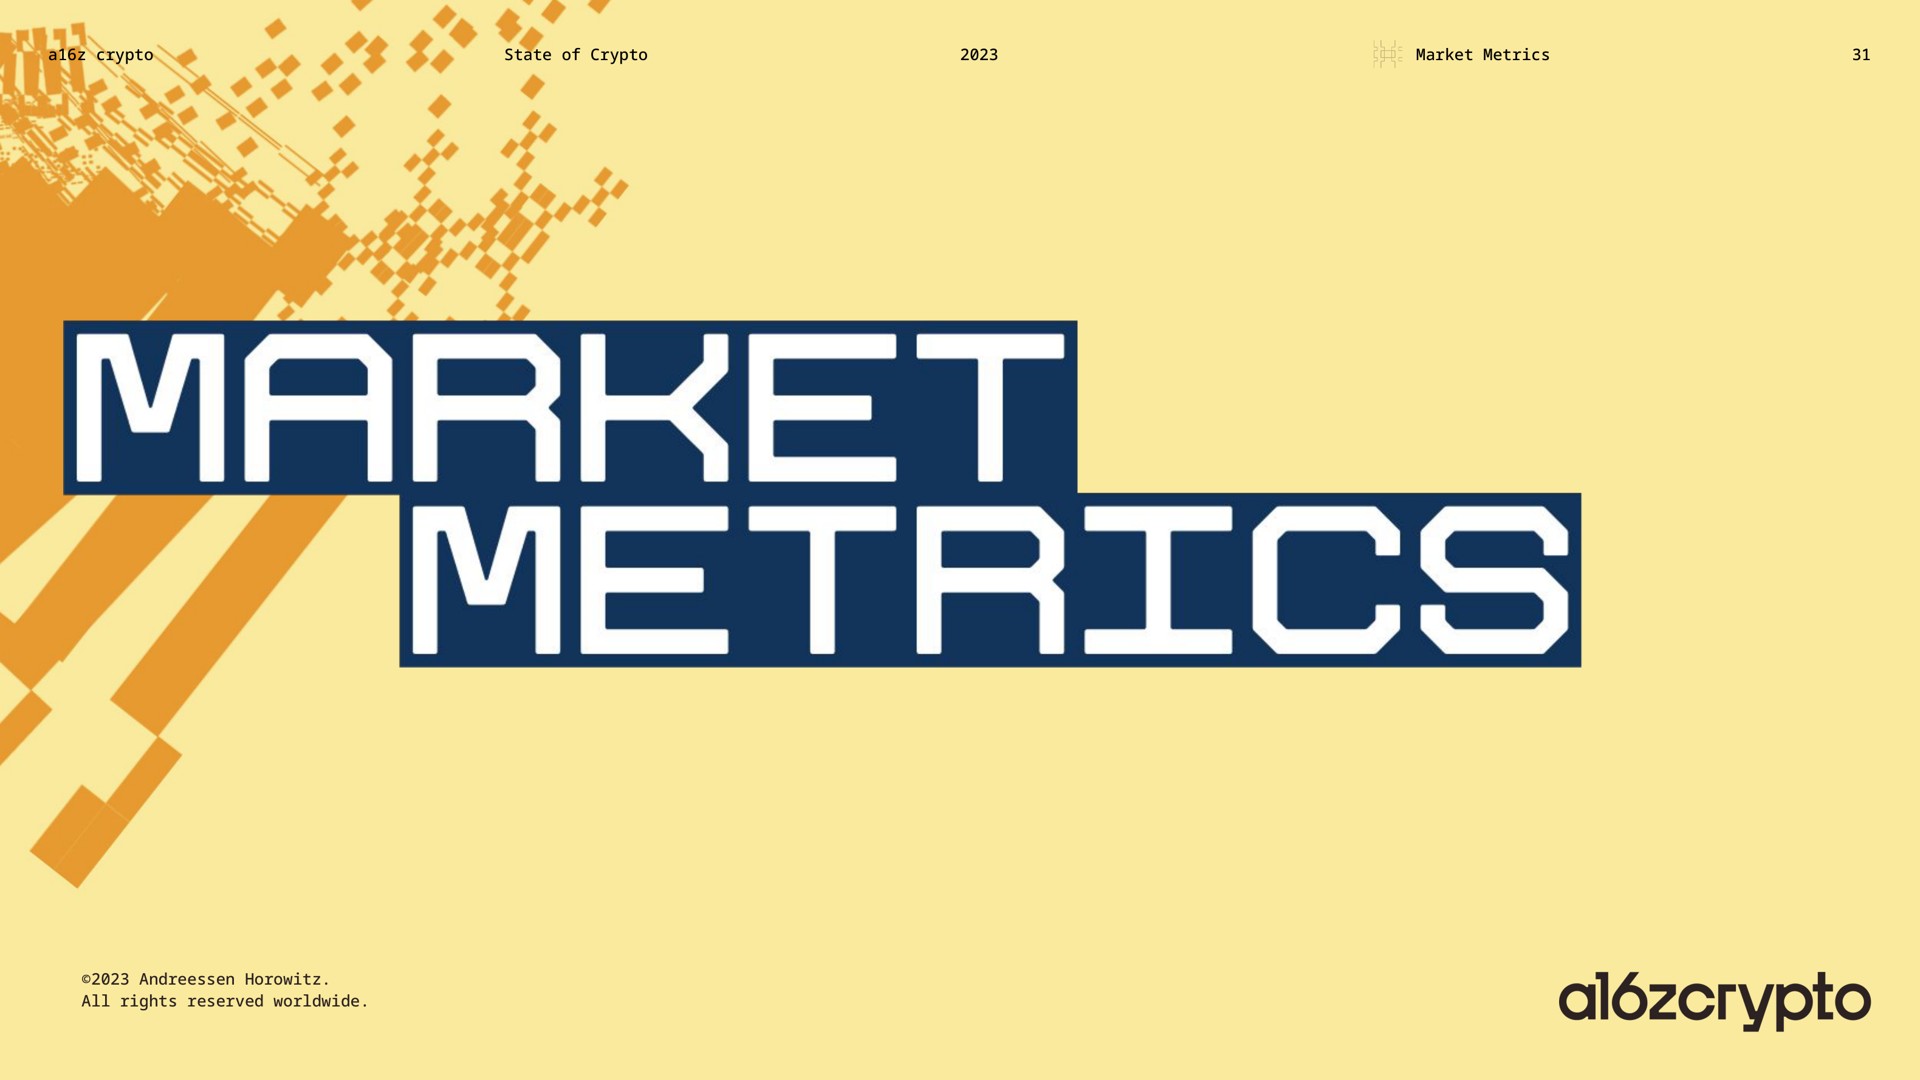 metrics | a16z